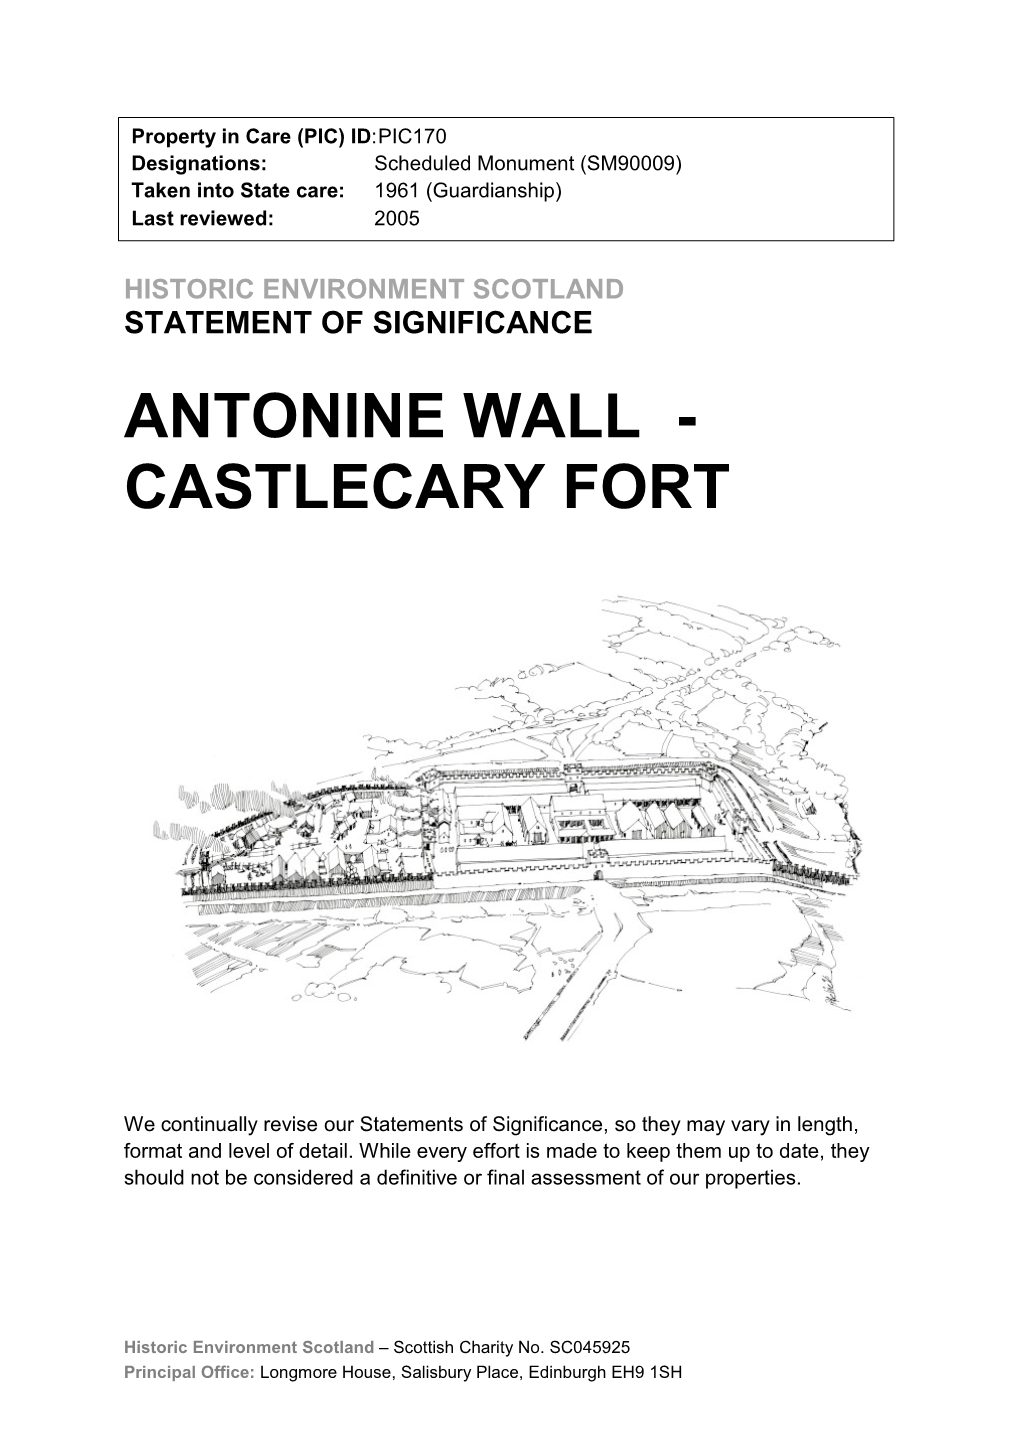 Antonine Wall - Castlecary Fort